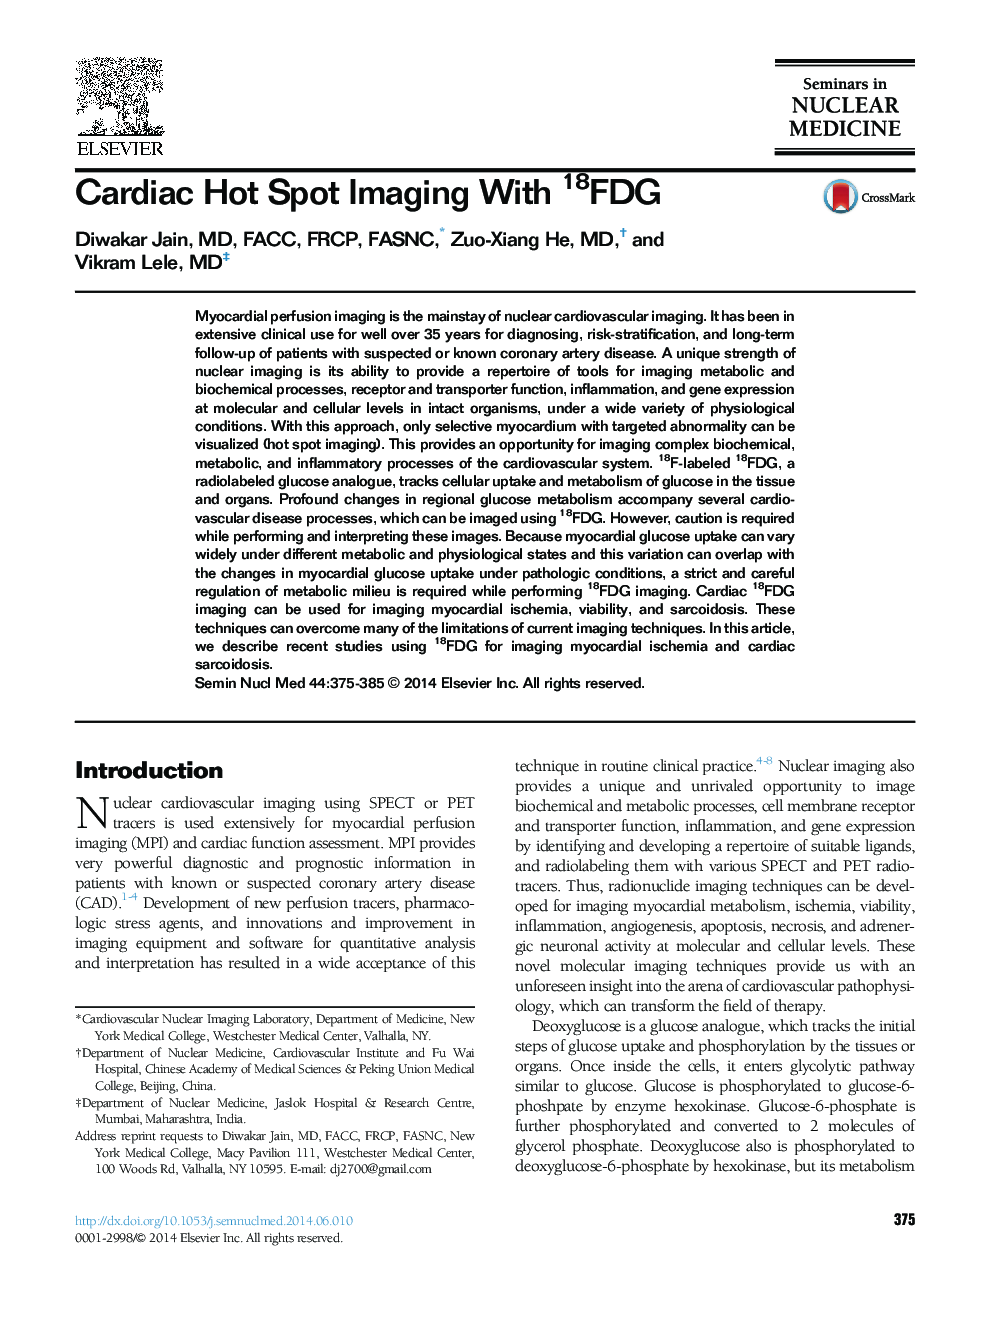 Cardiac Hot Spot Imaging With 18FDG